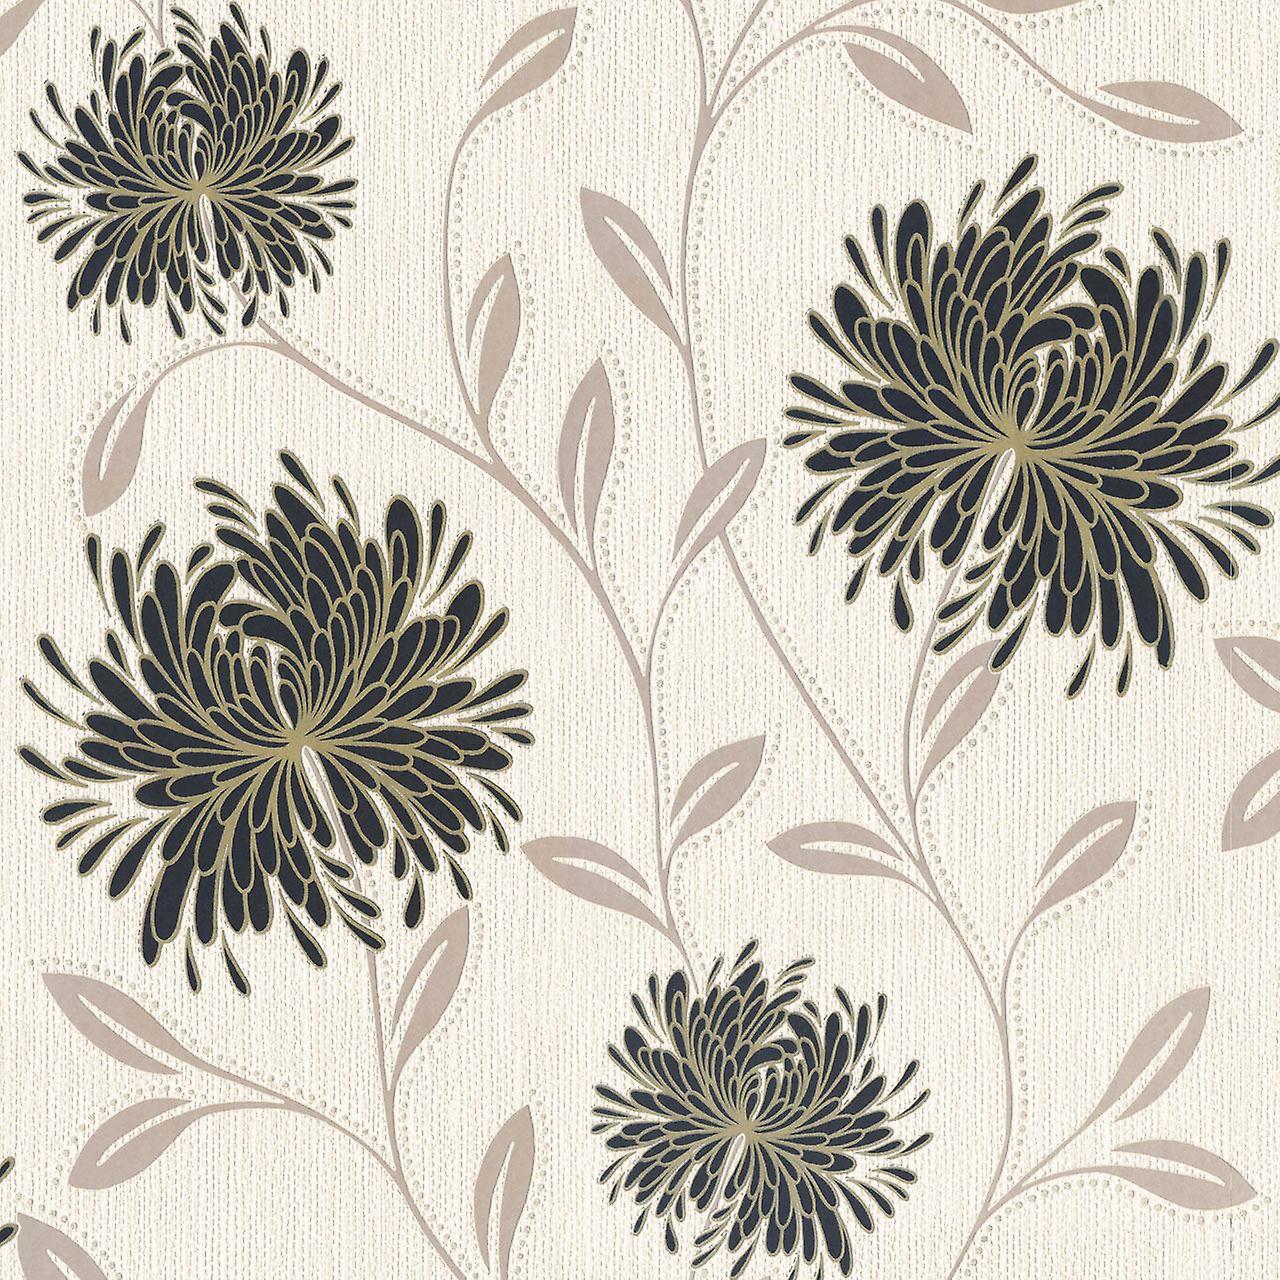 Flower Floral Luxury Textured Embossed Vinyl Wallpaper Glitter Cream Black Gold 